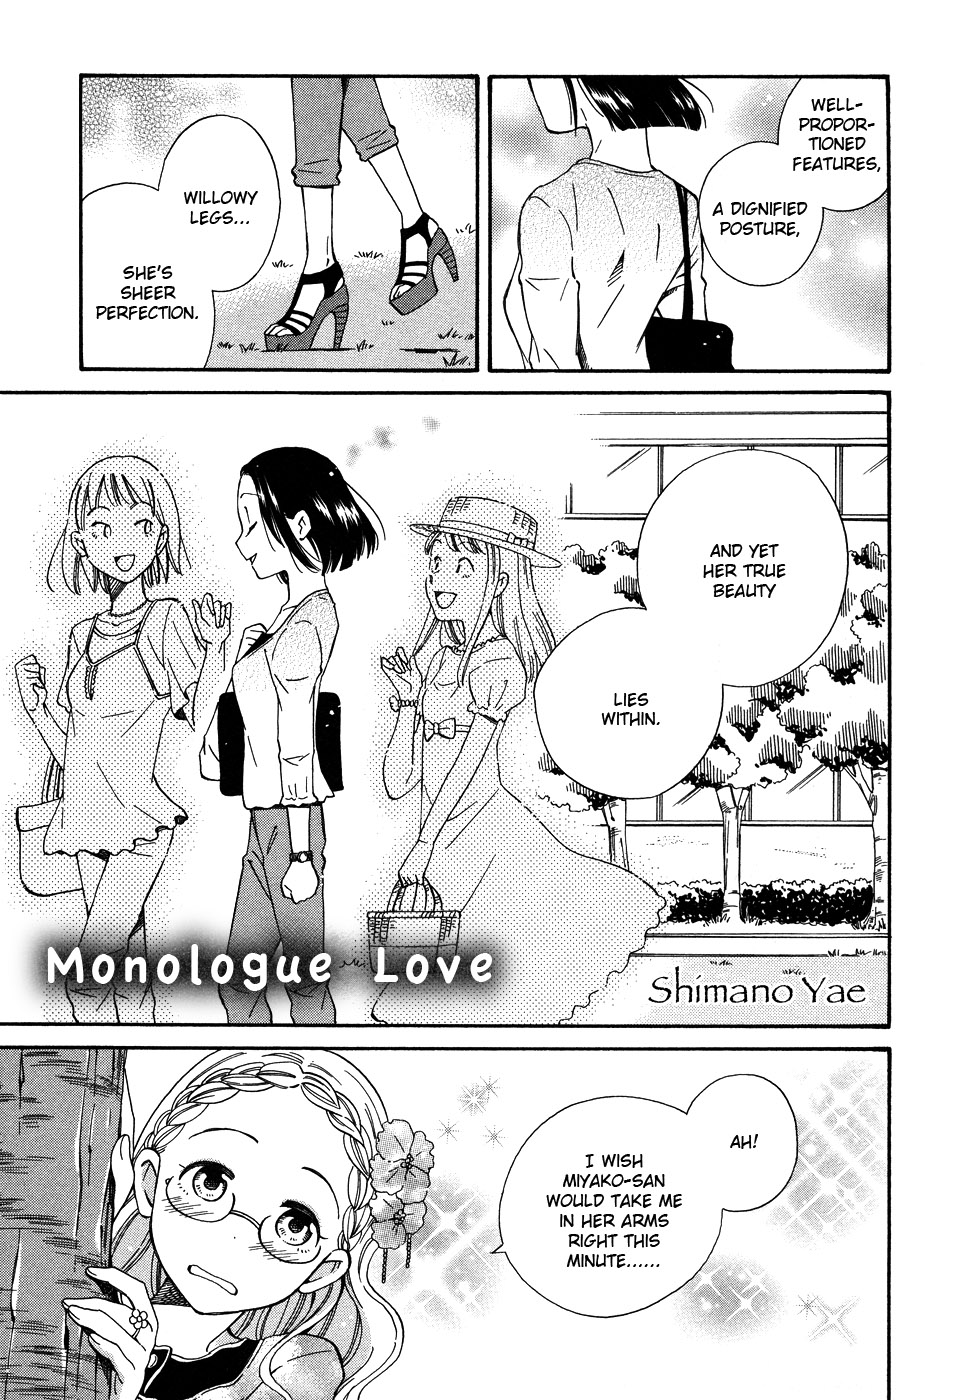 Yume yori Suteki na Vol. 1 Ch. 5 Monologue Love